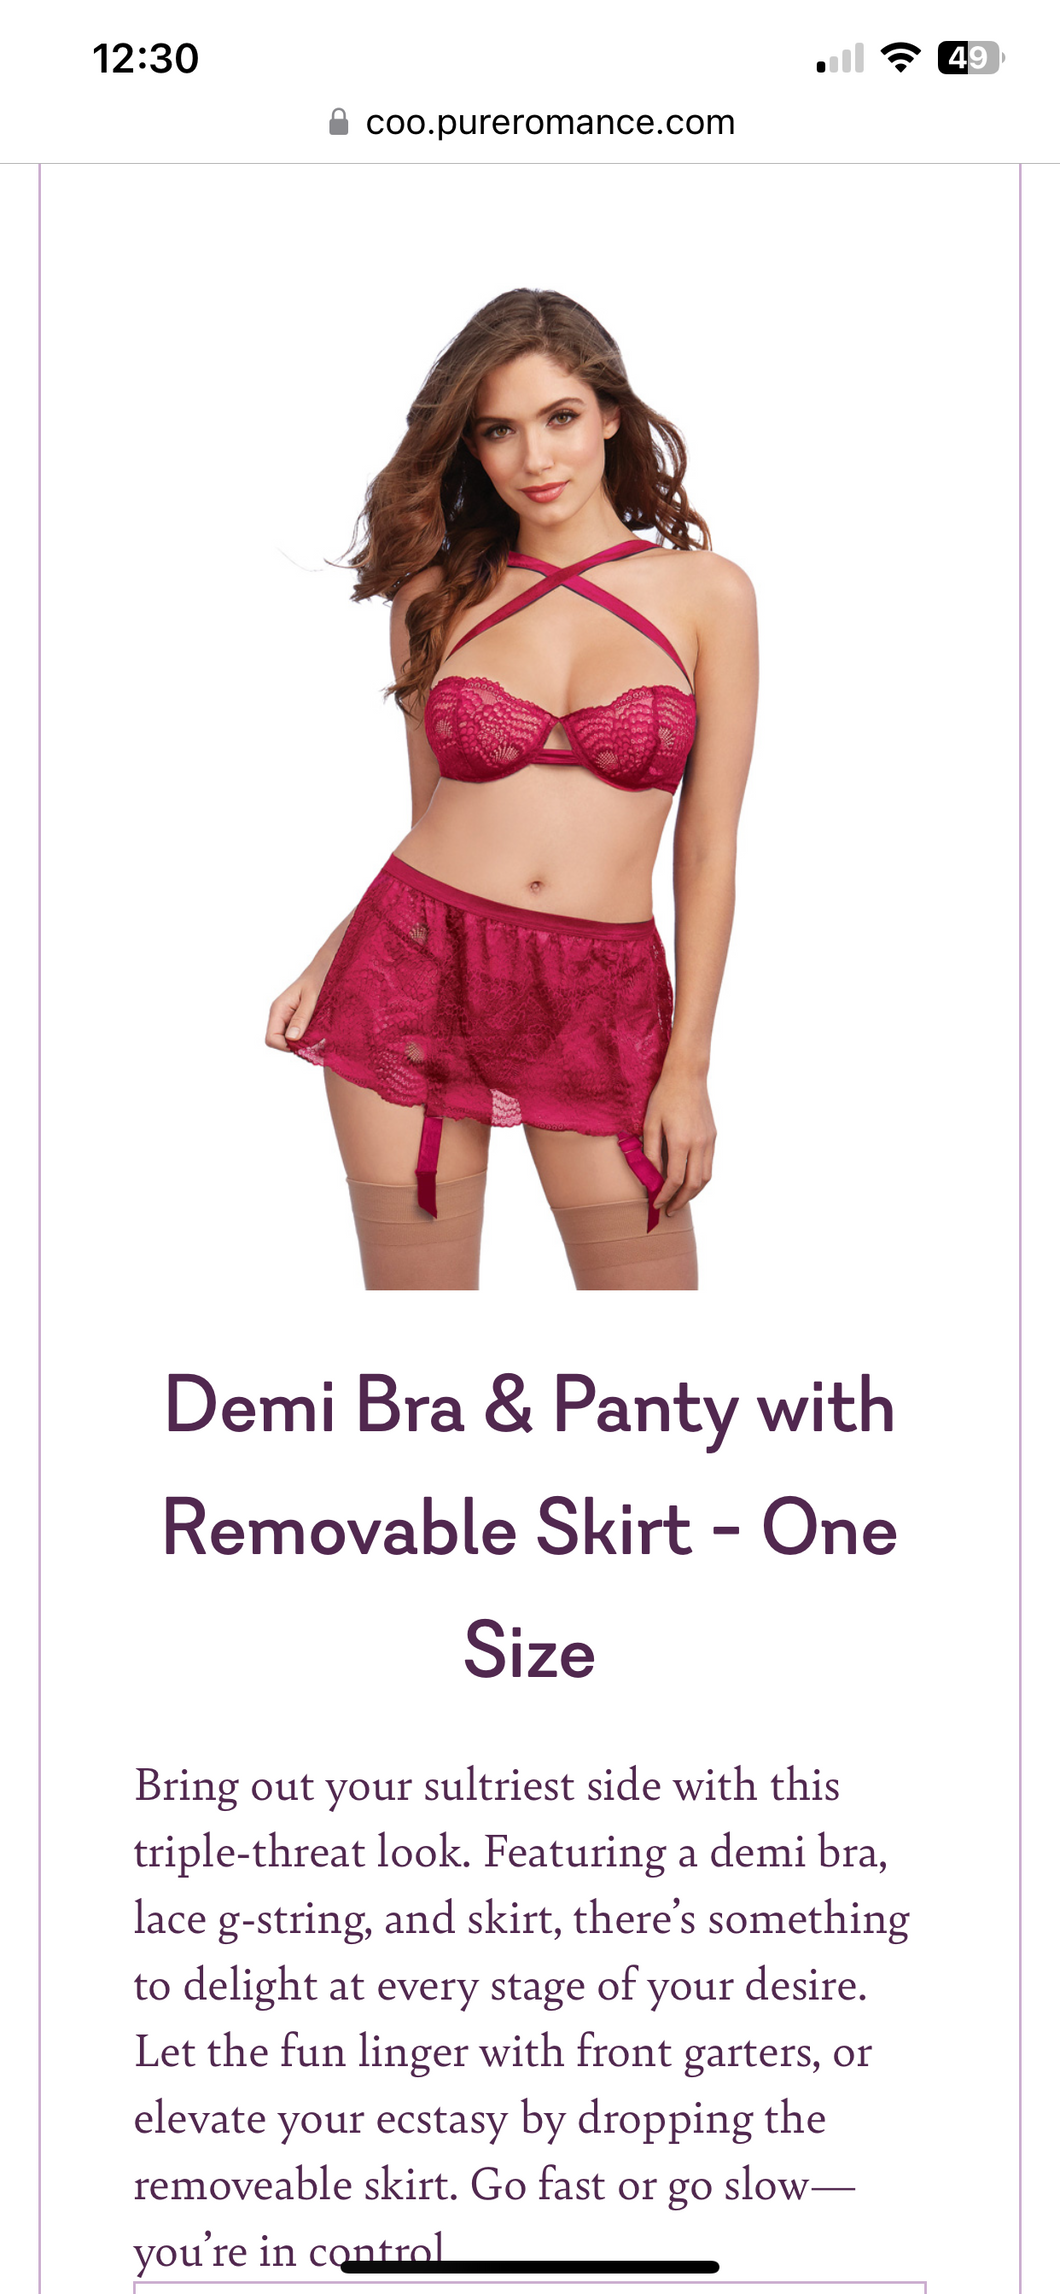 Demi Bra & Panty with Skirt set